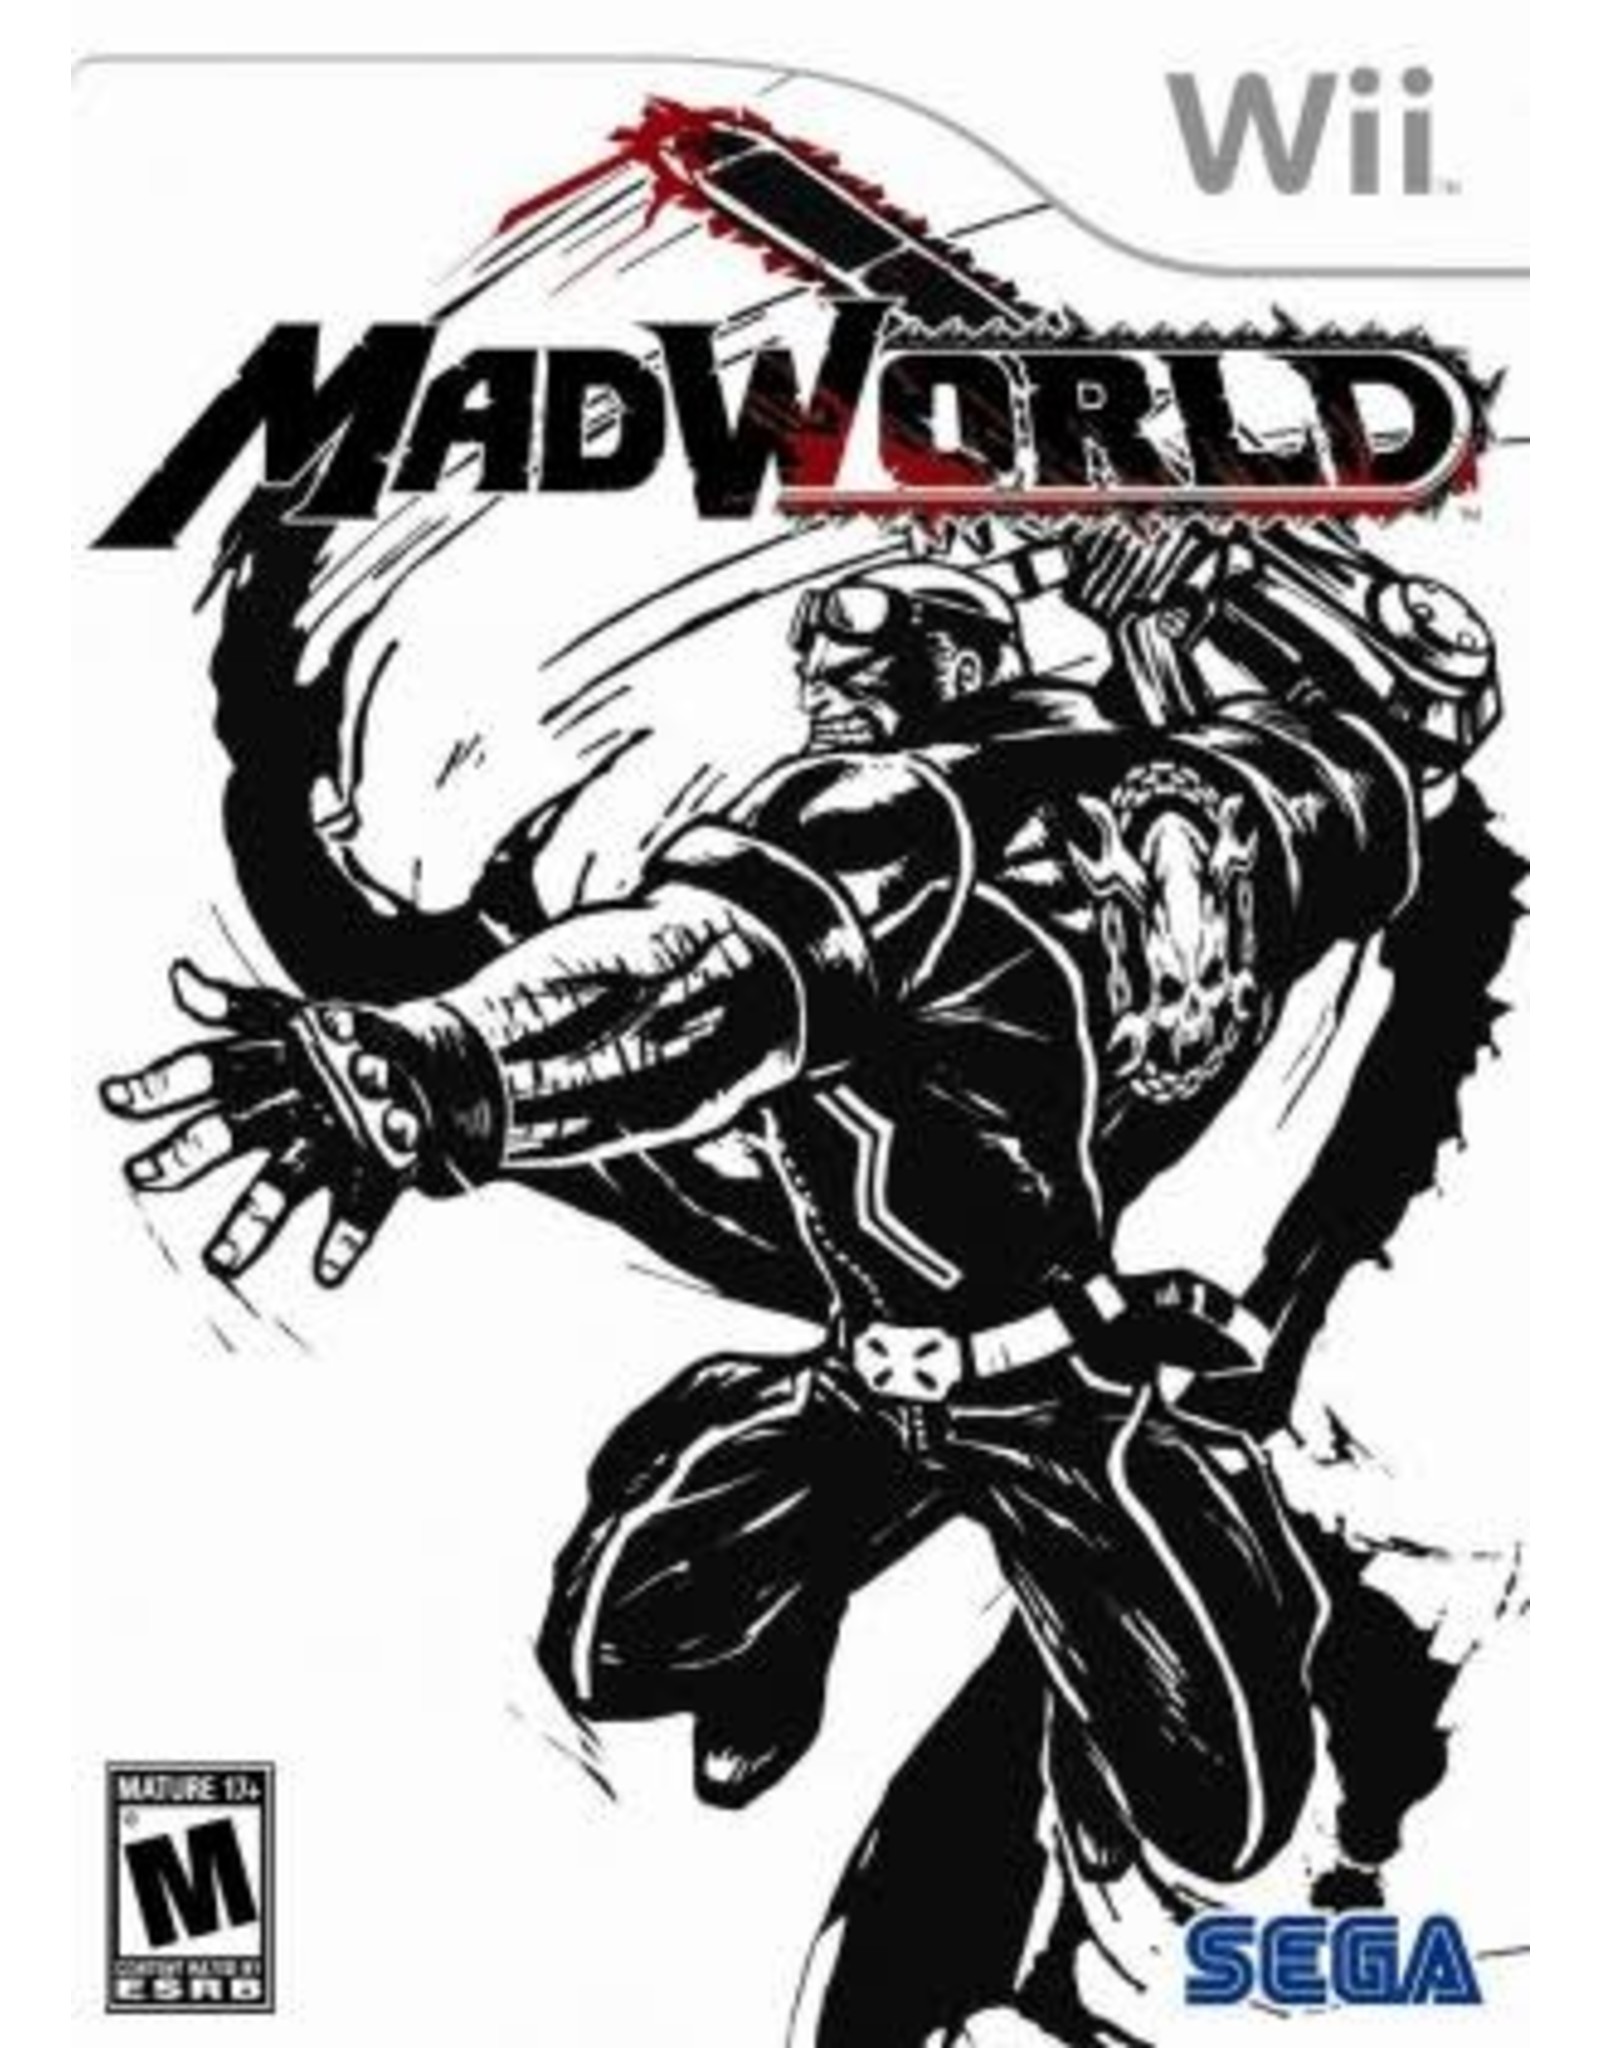 Wii Mad World (CiB)